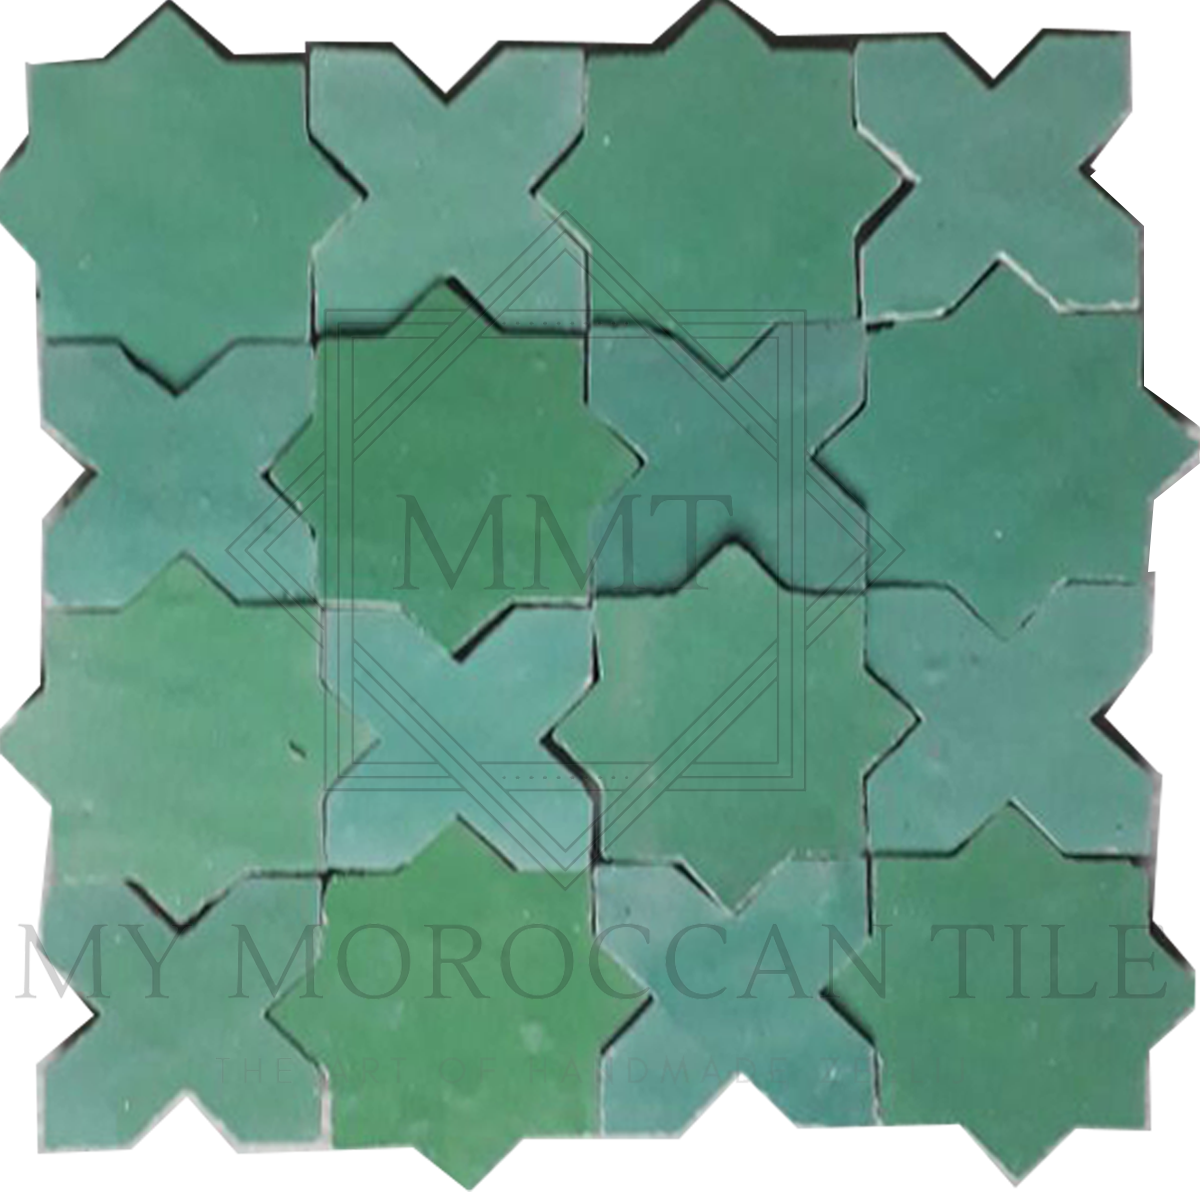 Star and Cross Moroccan Tile